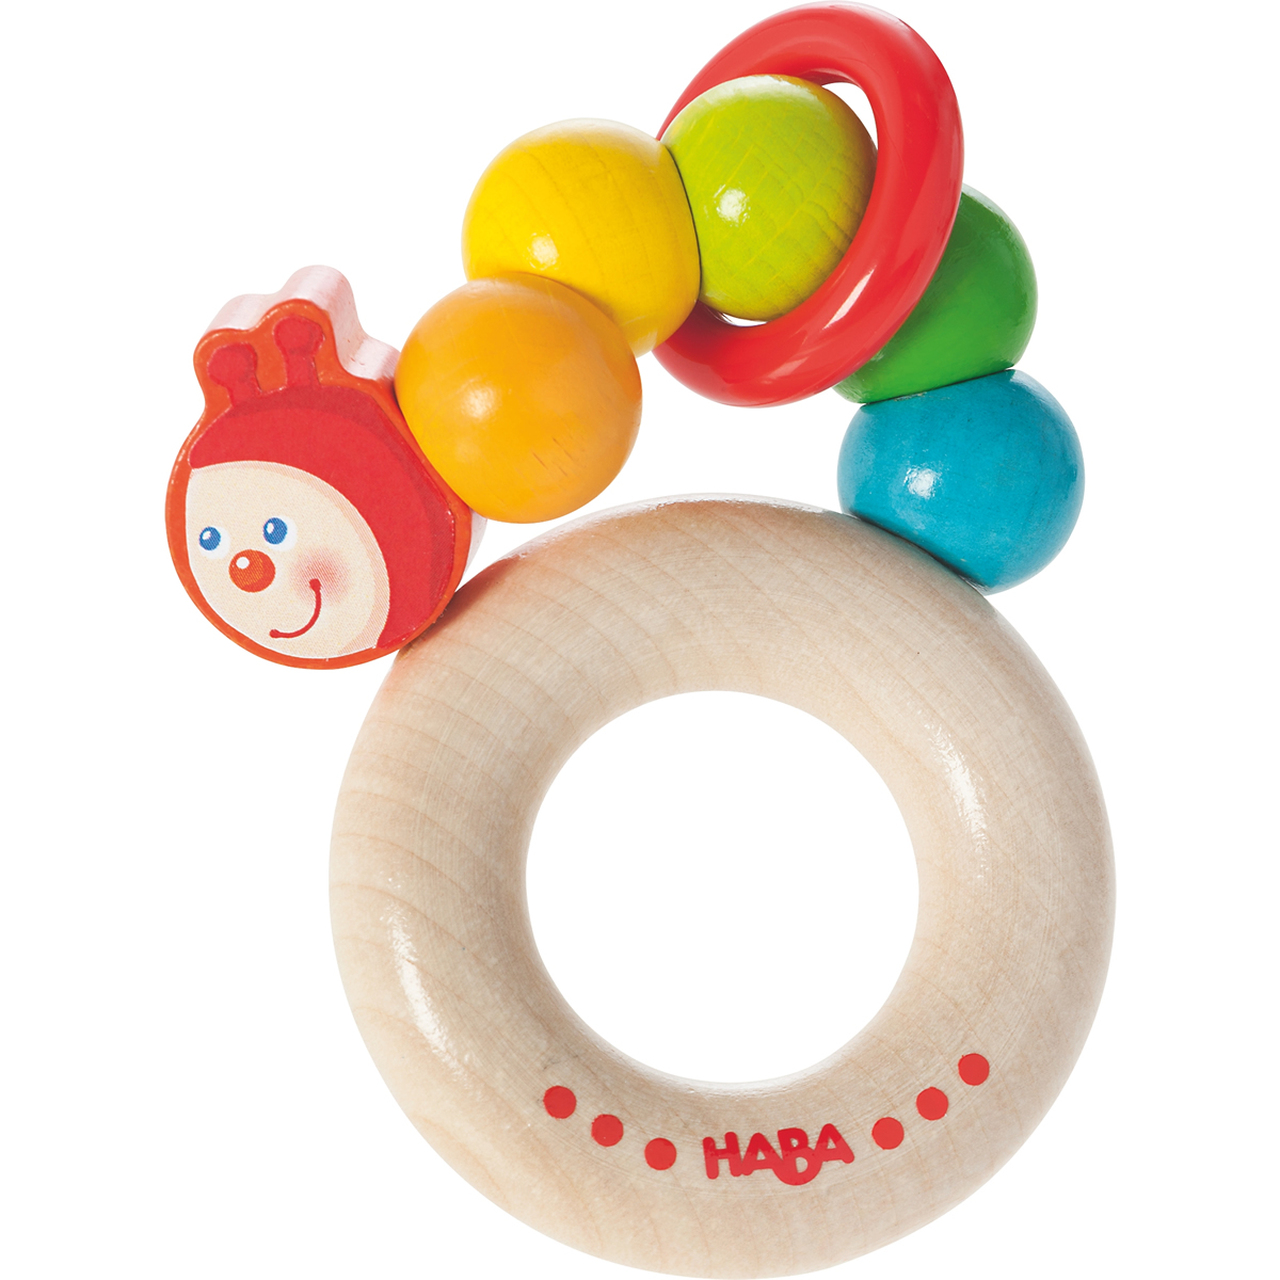 HABA Rainbow Catepillar Clutching Toy